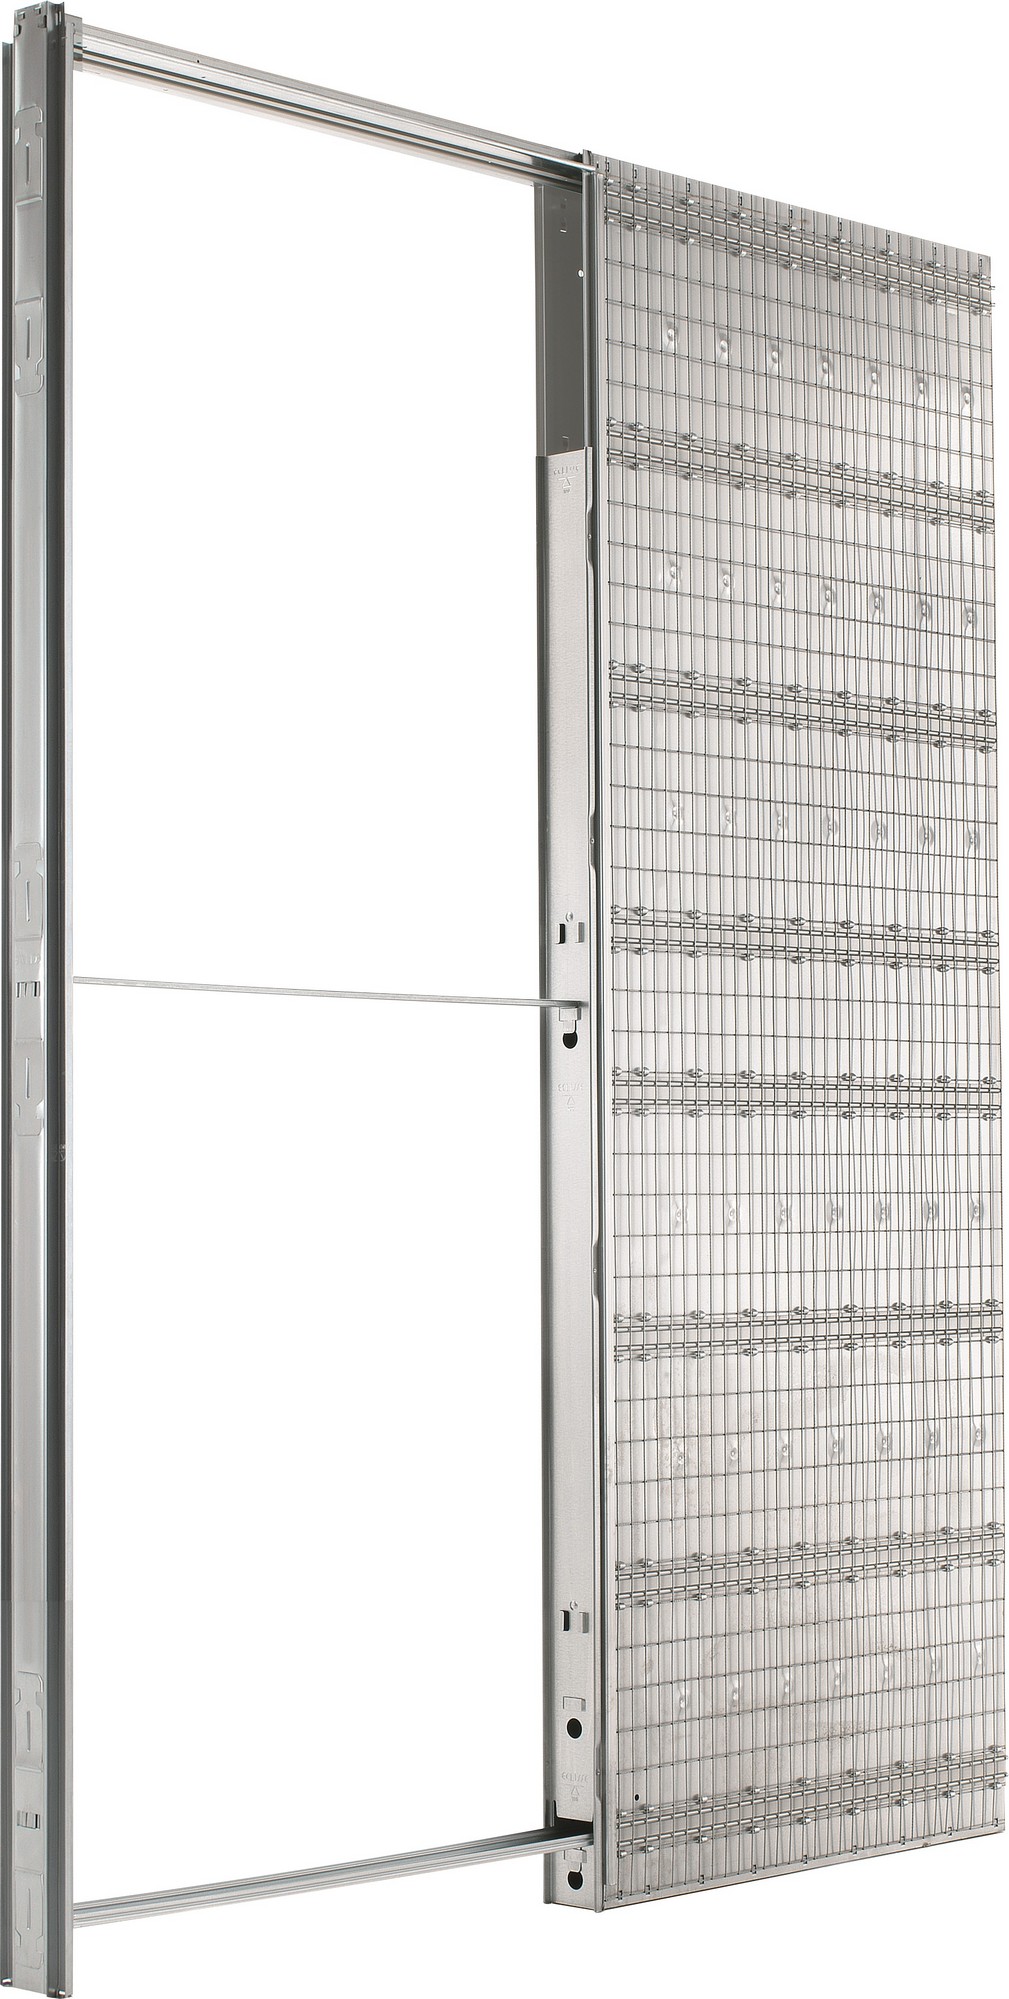 Pouzdro Eclisse Standard 900/2100 mm do zdiva tl. 108 mm